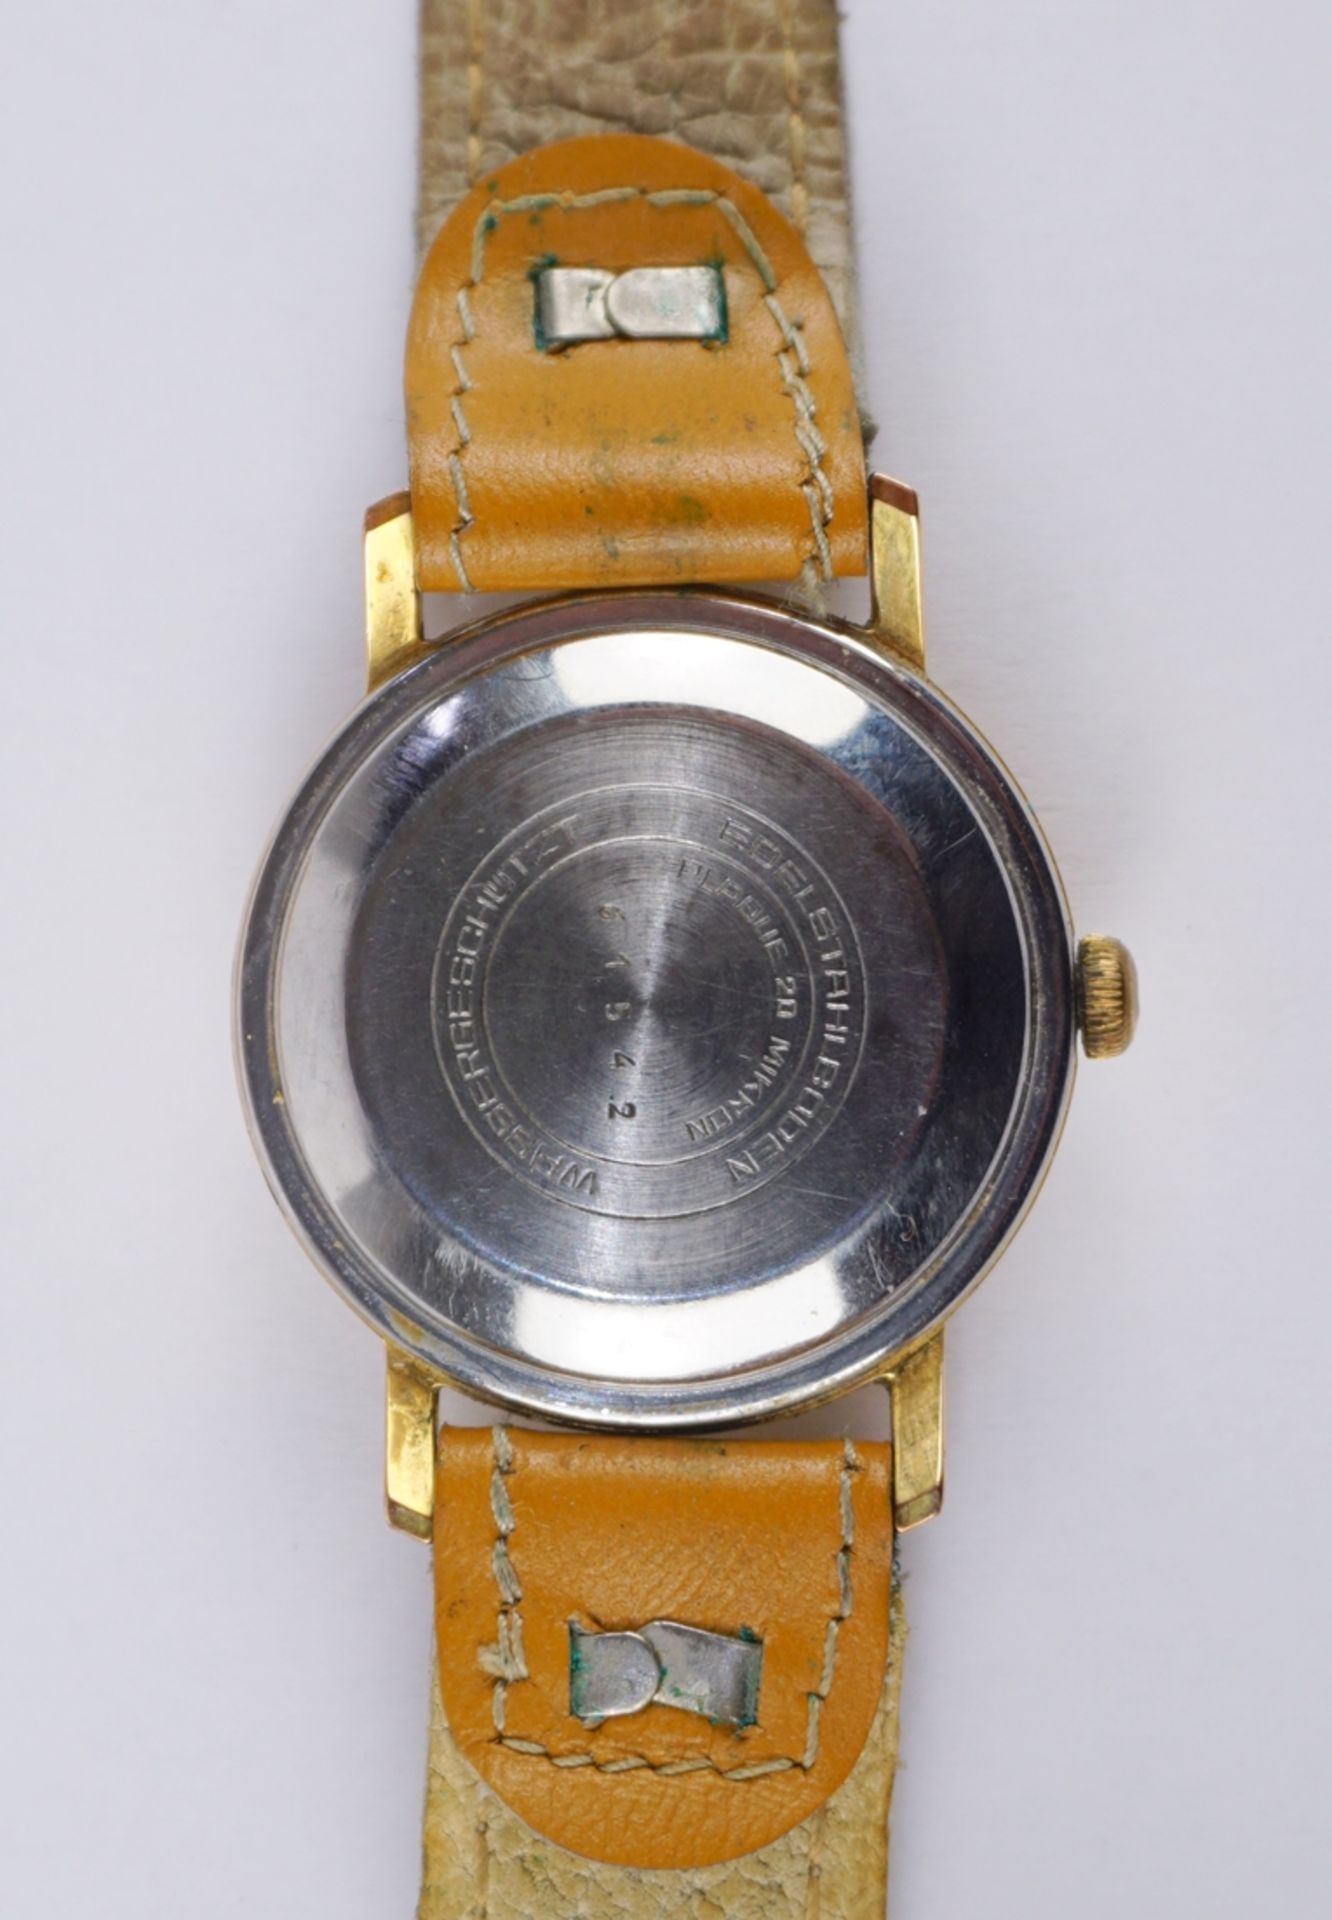 Armbanduhr GUB Kal. 67.11 Automat, in Etui mit Kaufbeleg - Bild 3 aus 4